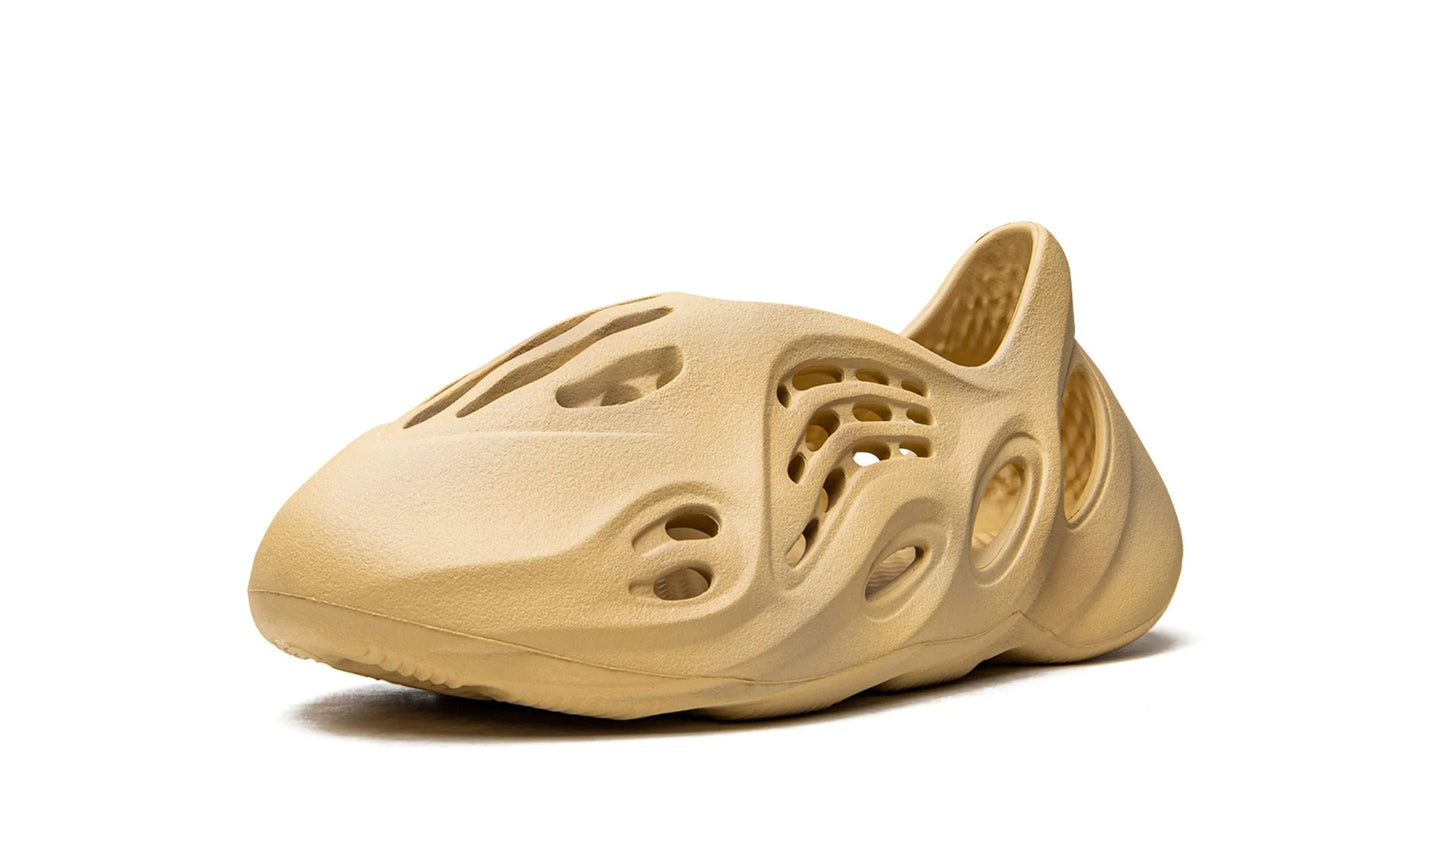 Adidas Yeezy Foam Runner Desert Sand Single Shoe Front View